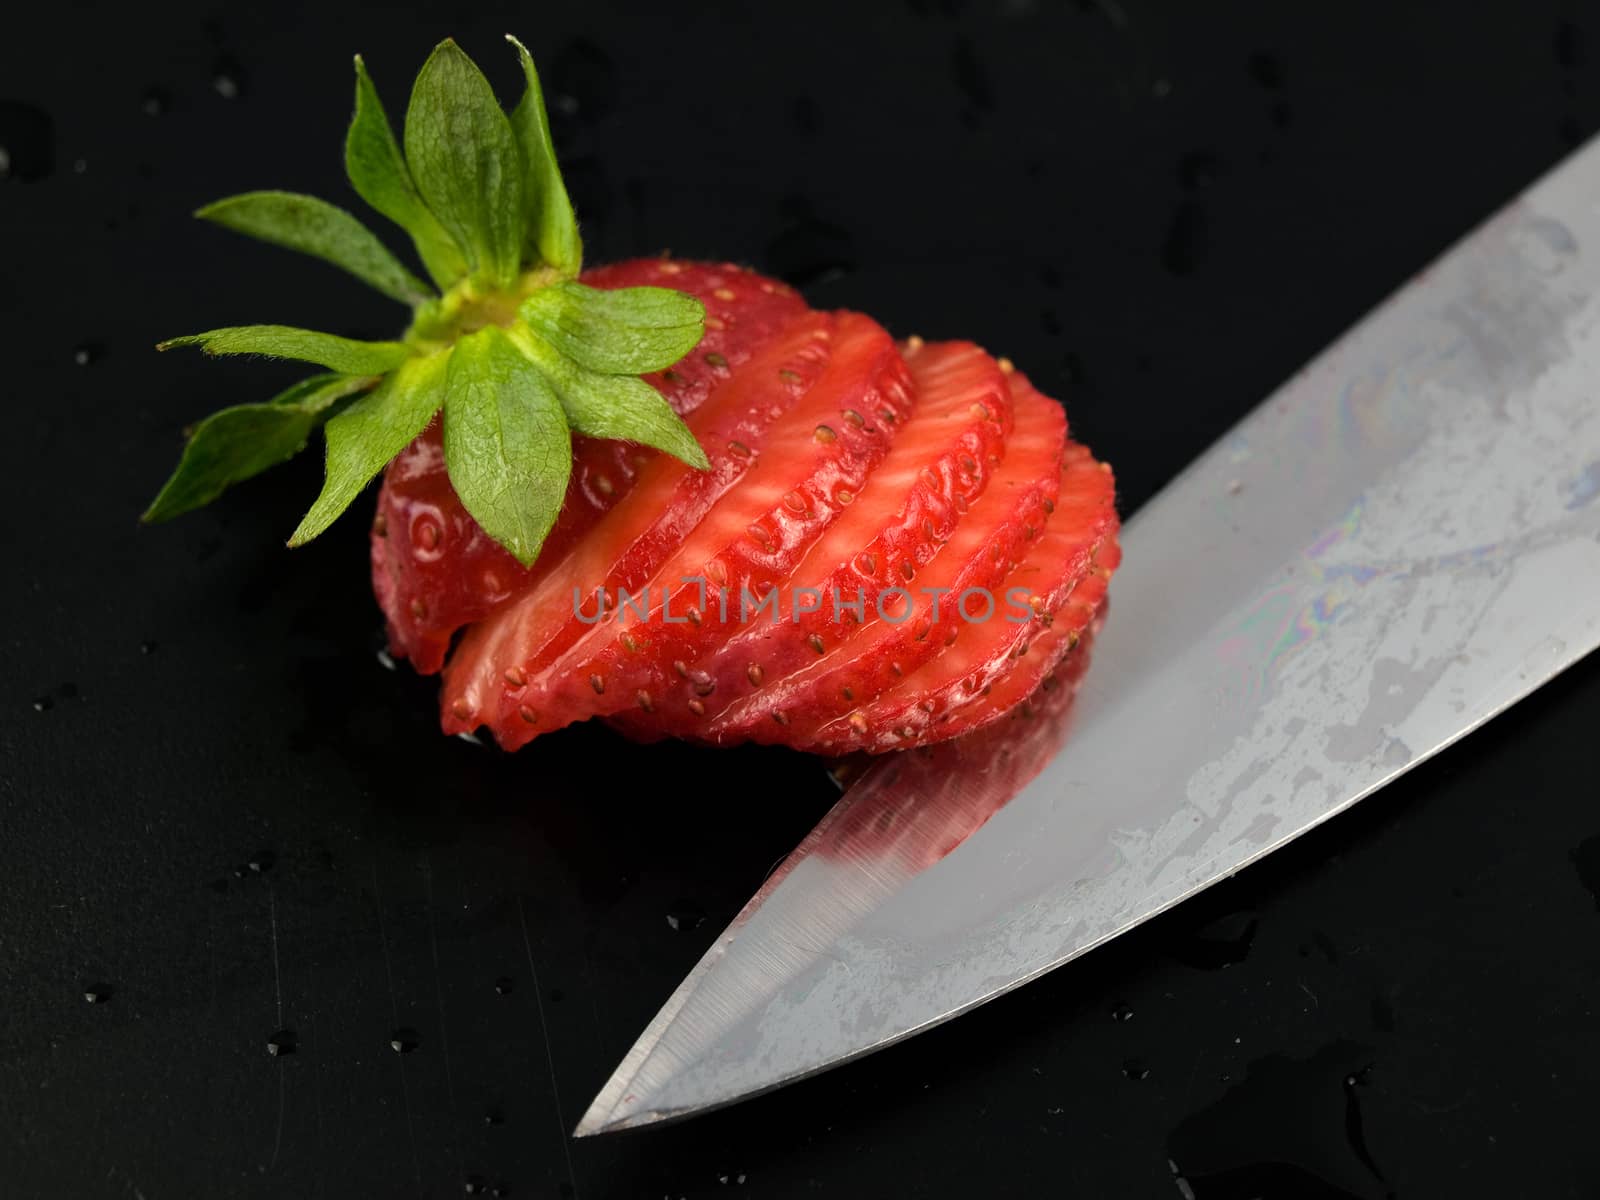 sliced srawberry with kife on black